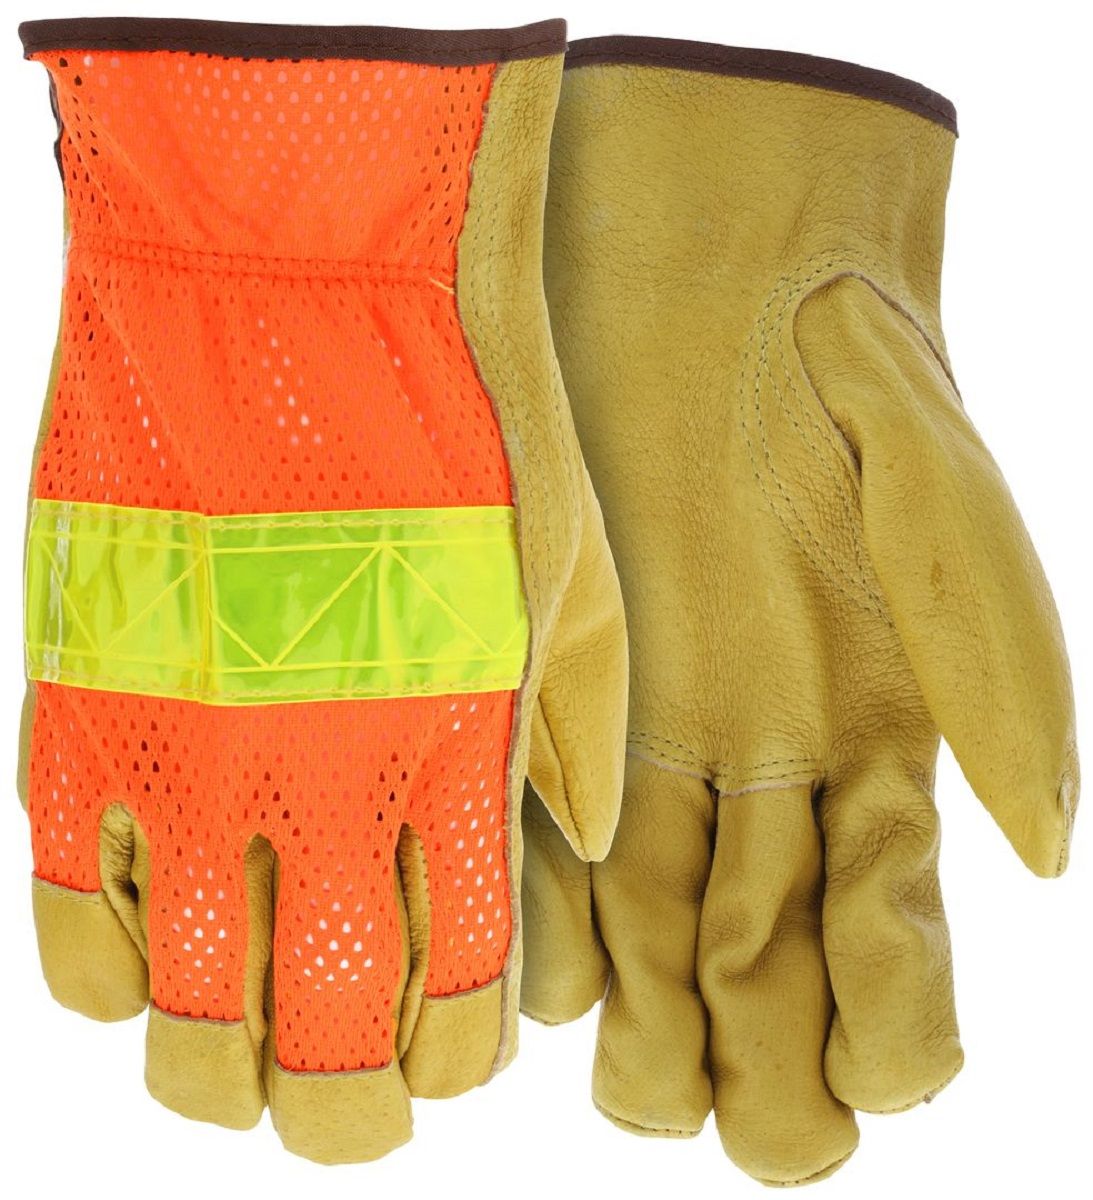 MCR Safety Luminator 34111 Premium Grade Grain Pigskin, Hi-Visibility Leather Drivers Work Gloves, Hi-Vis Orange, Box of 12 Pairs